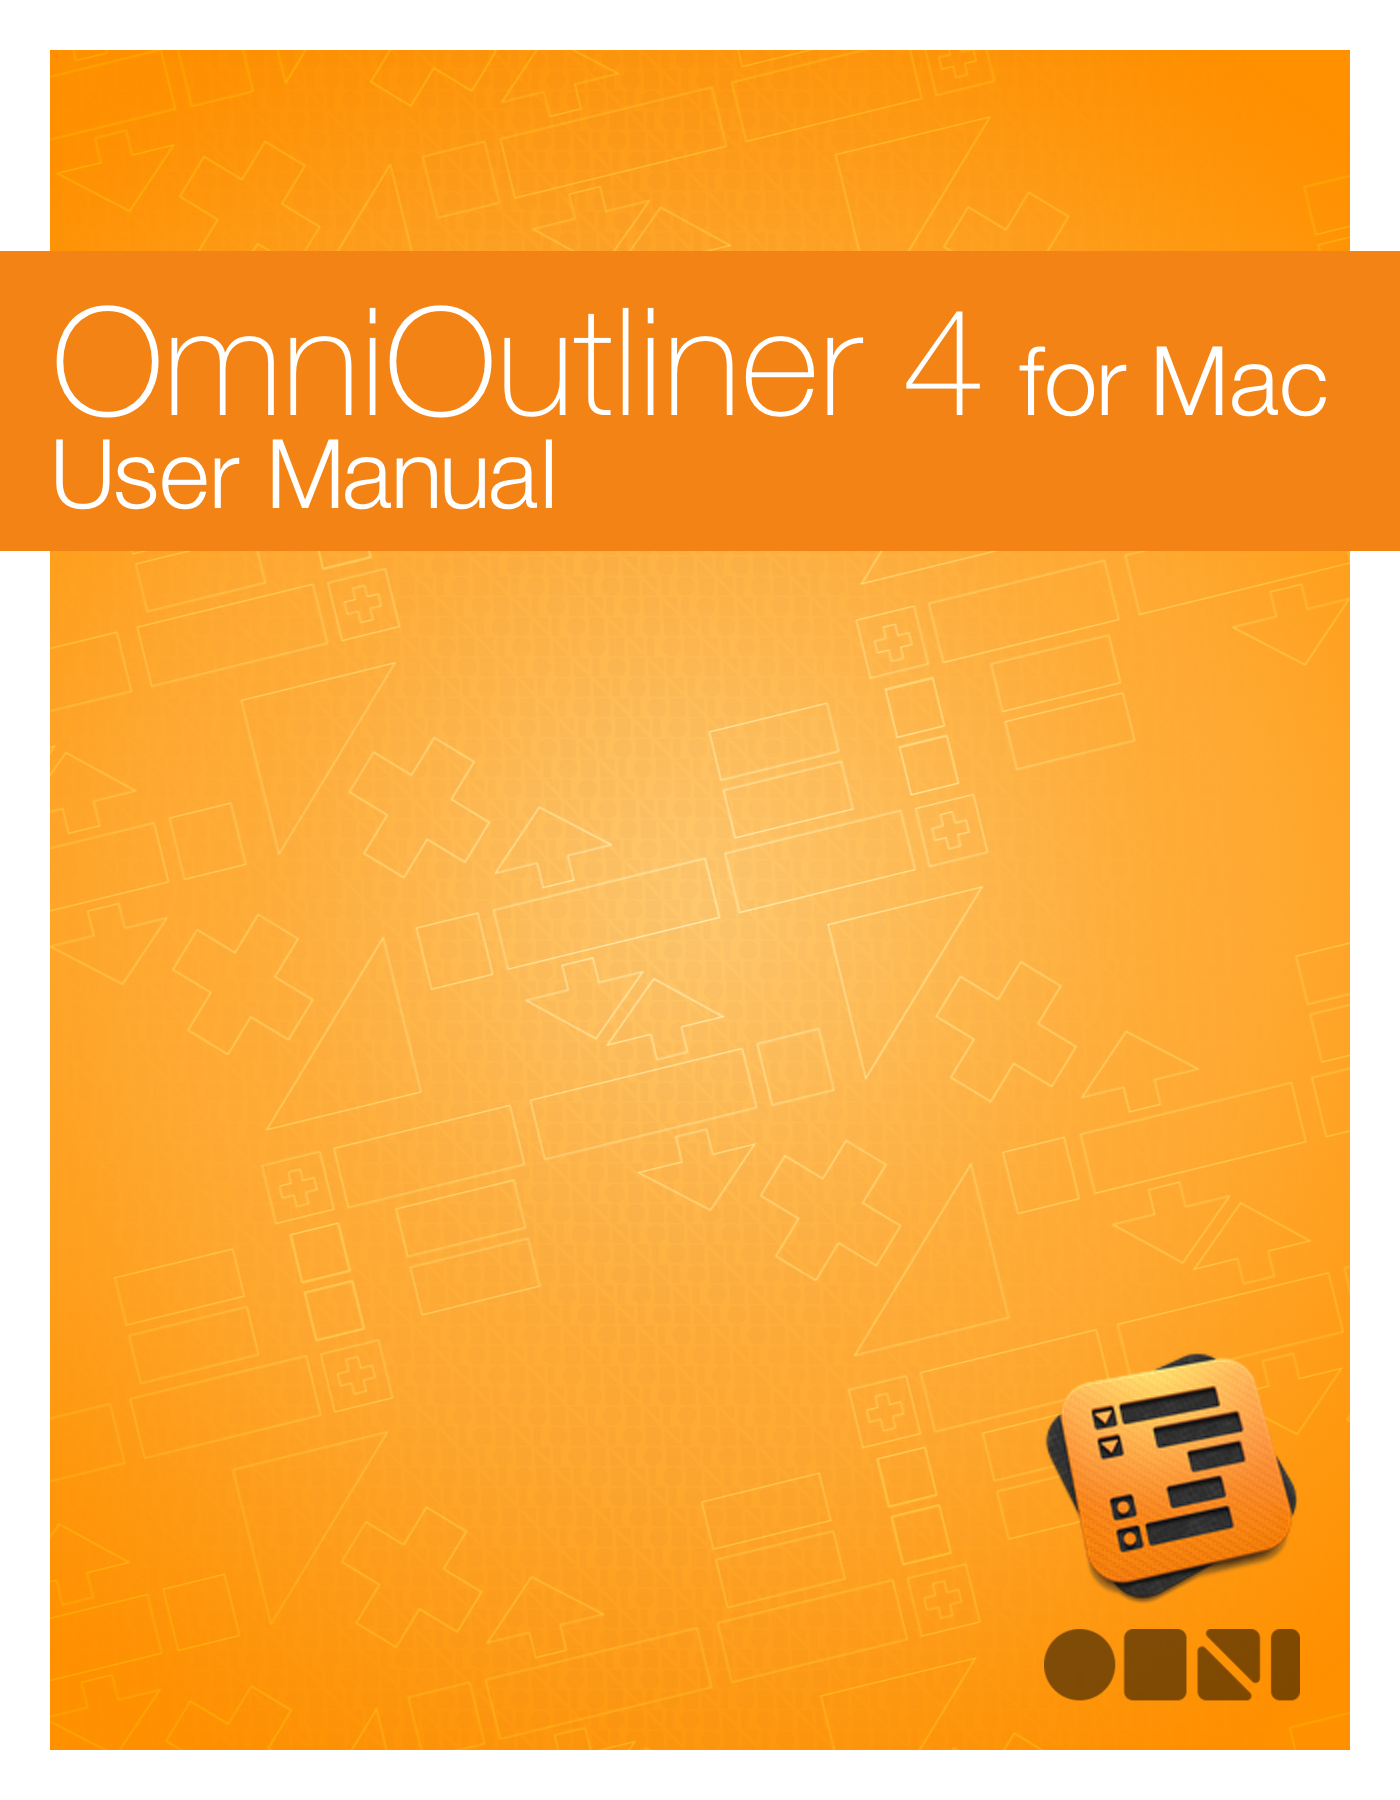 omnioutliner for mac